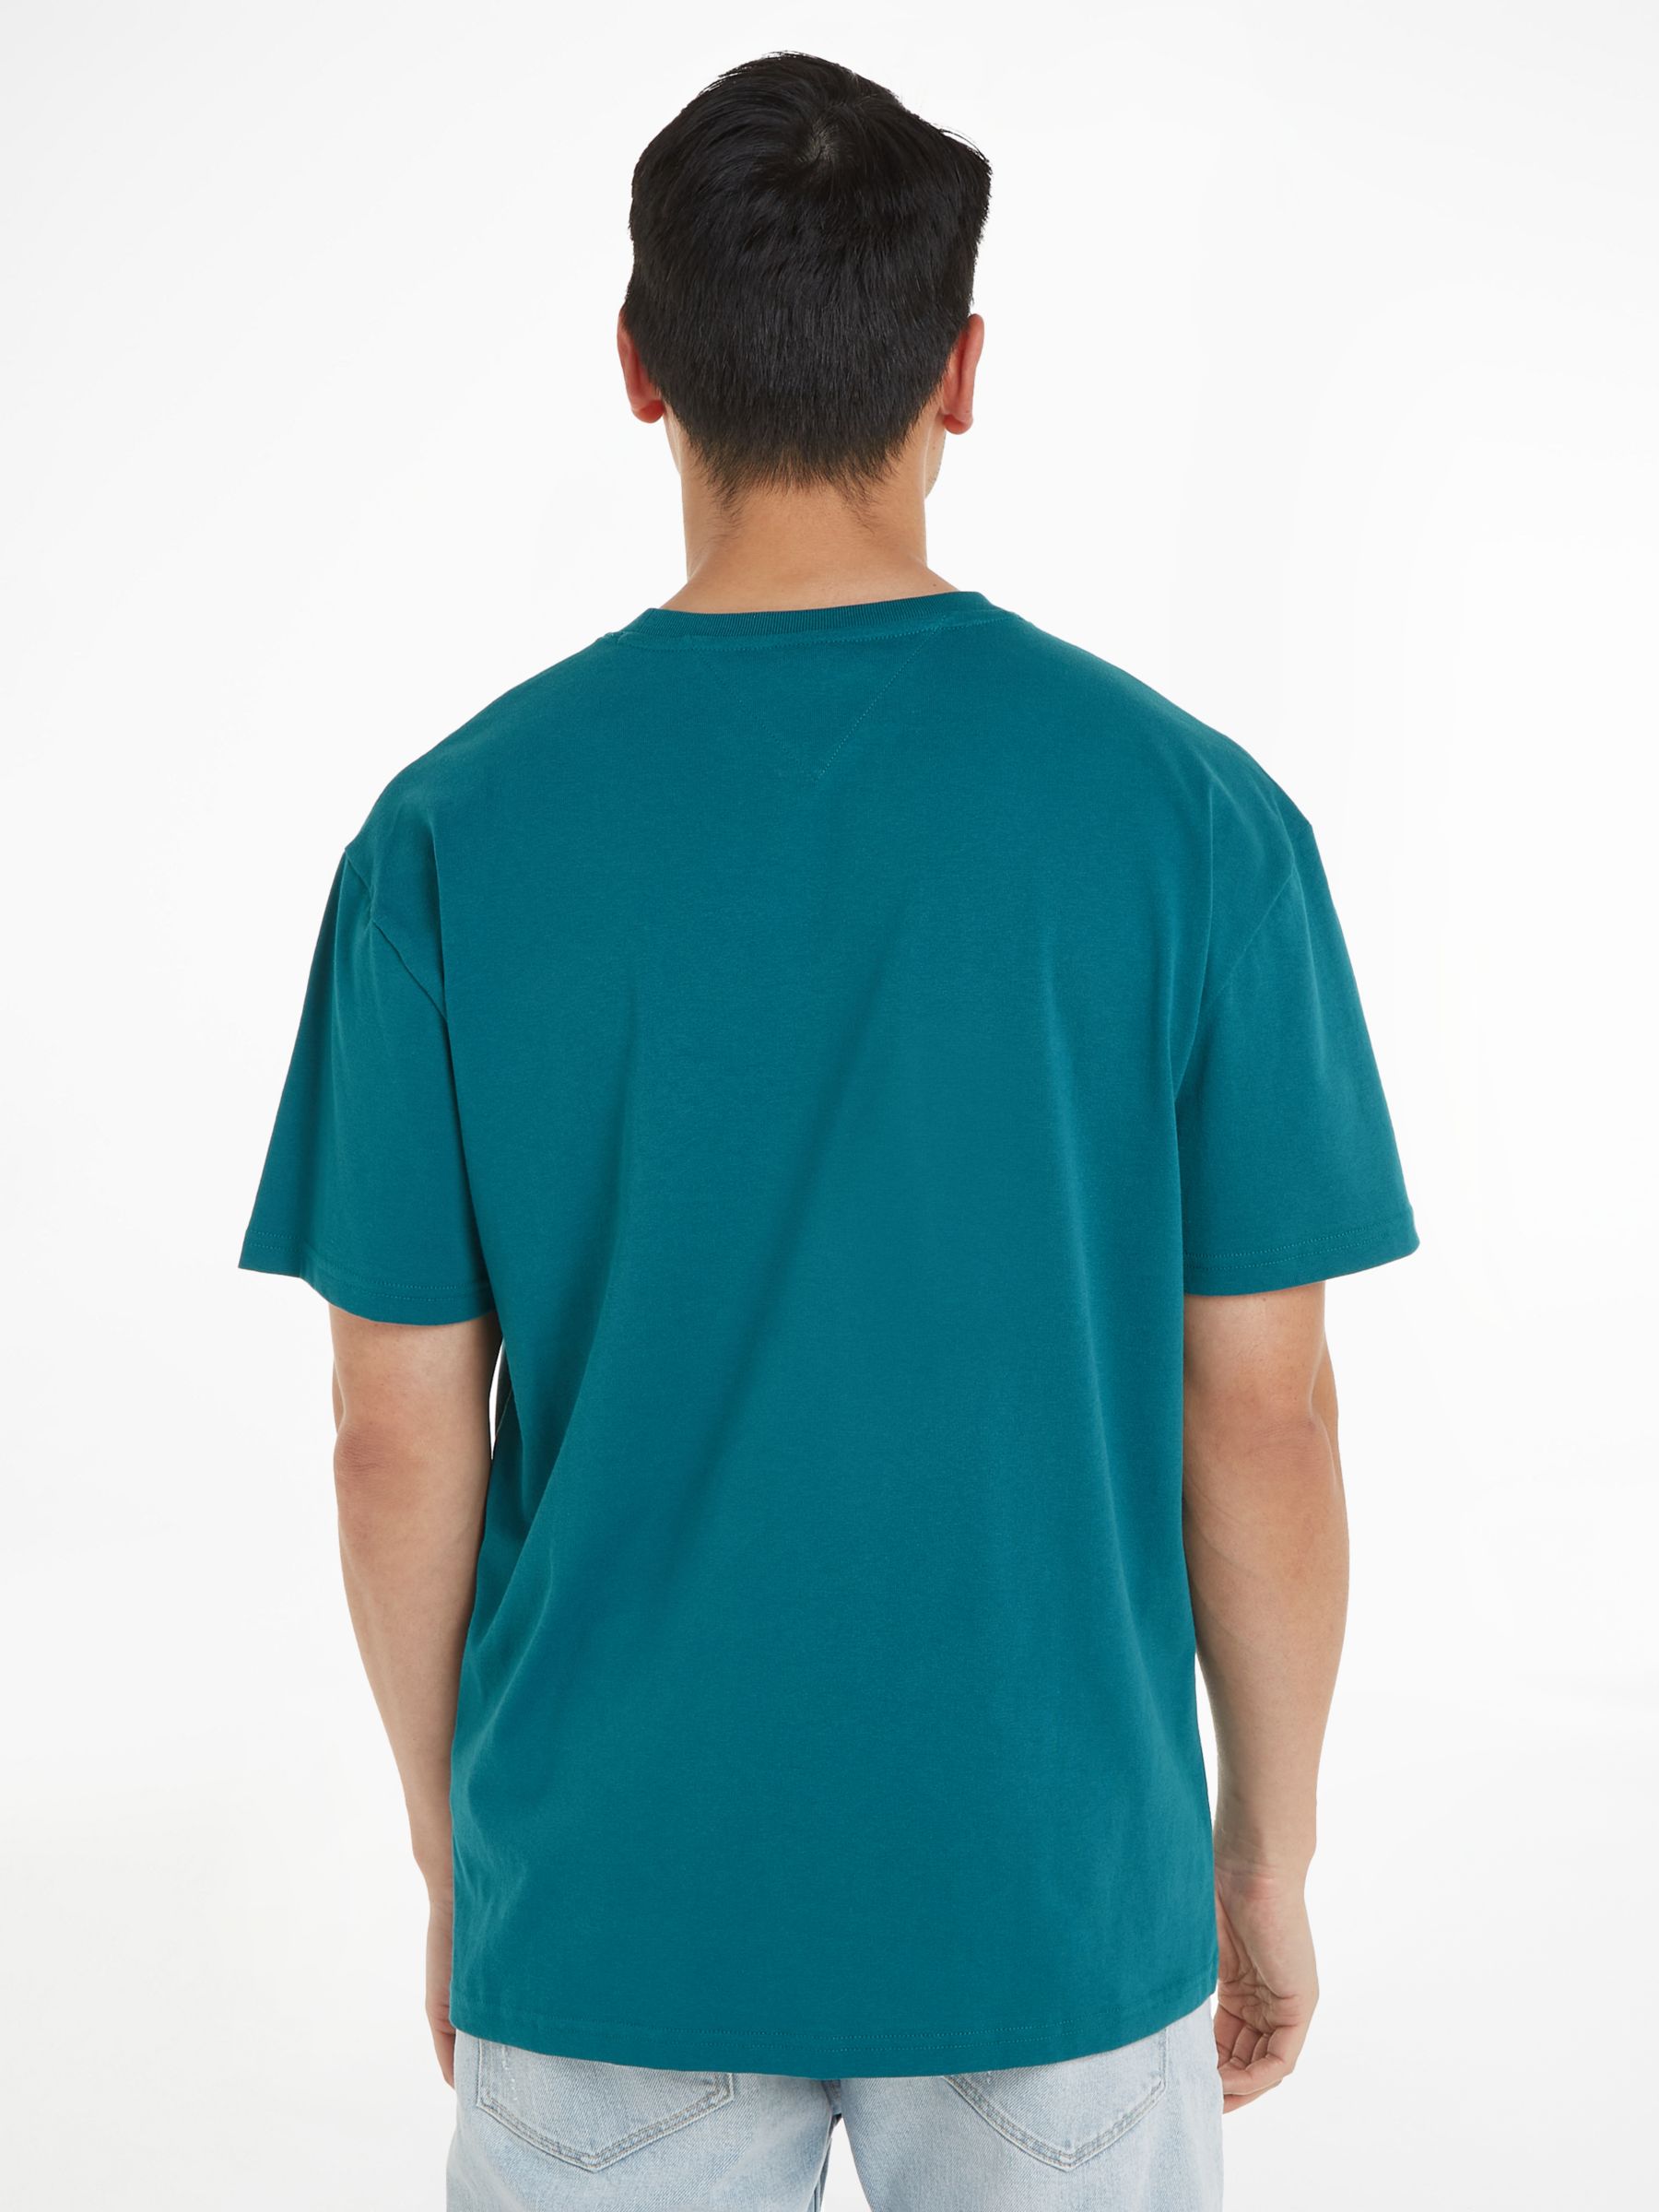 Tommy Jeans Logo Pop Colour T-Shirt, Timeless Teal, M